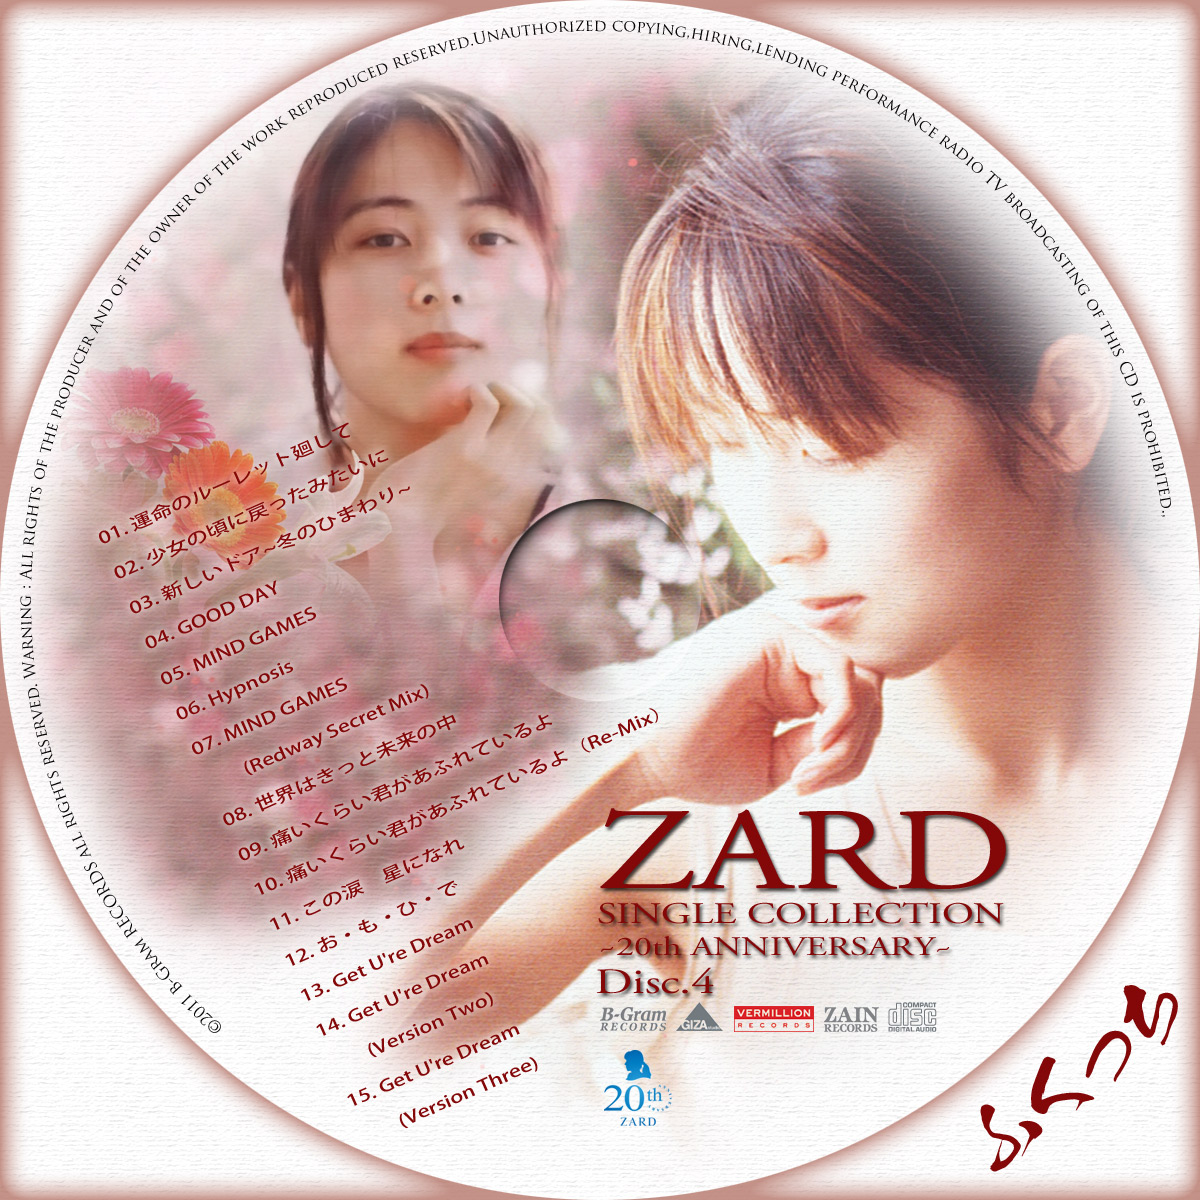 Zard single collection 20th anniversary rar